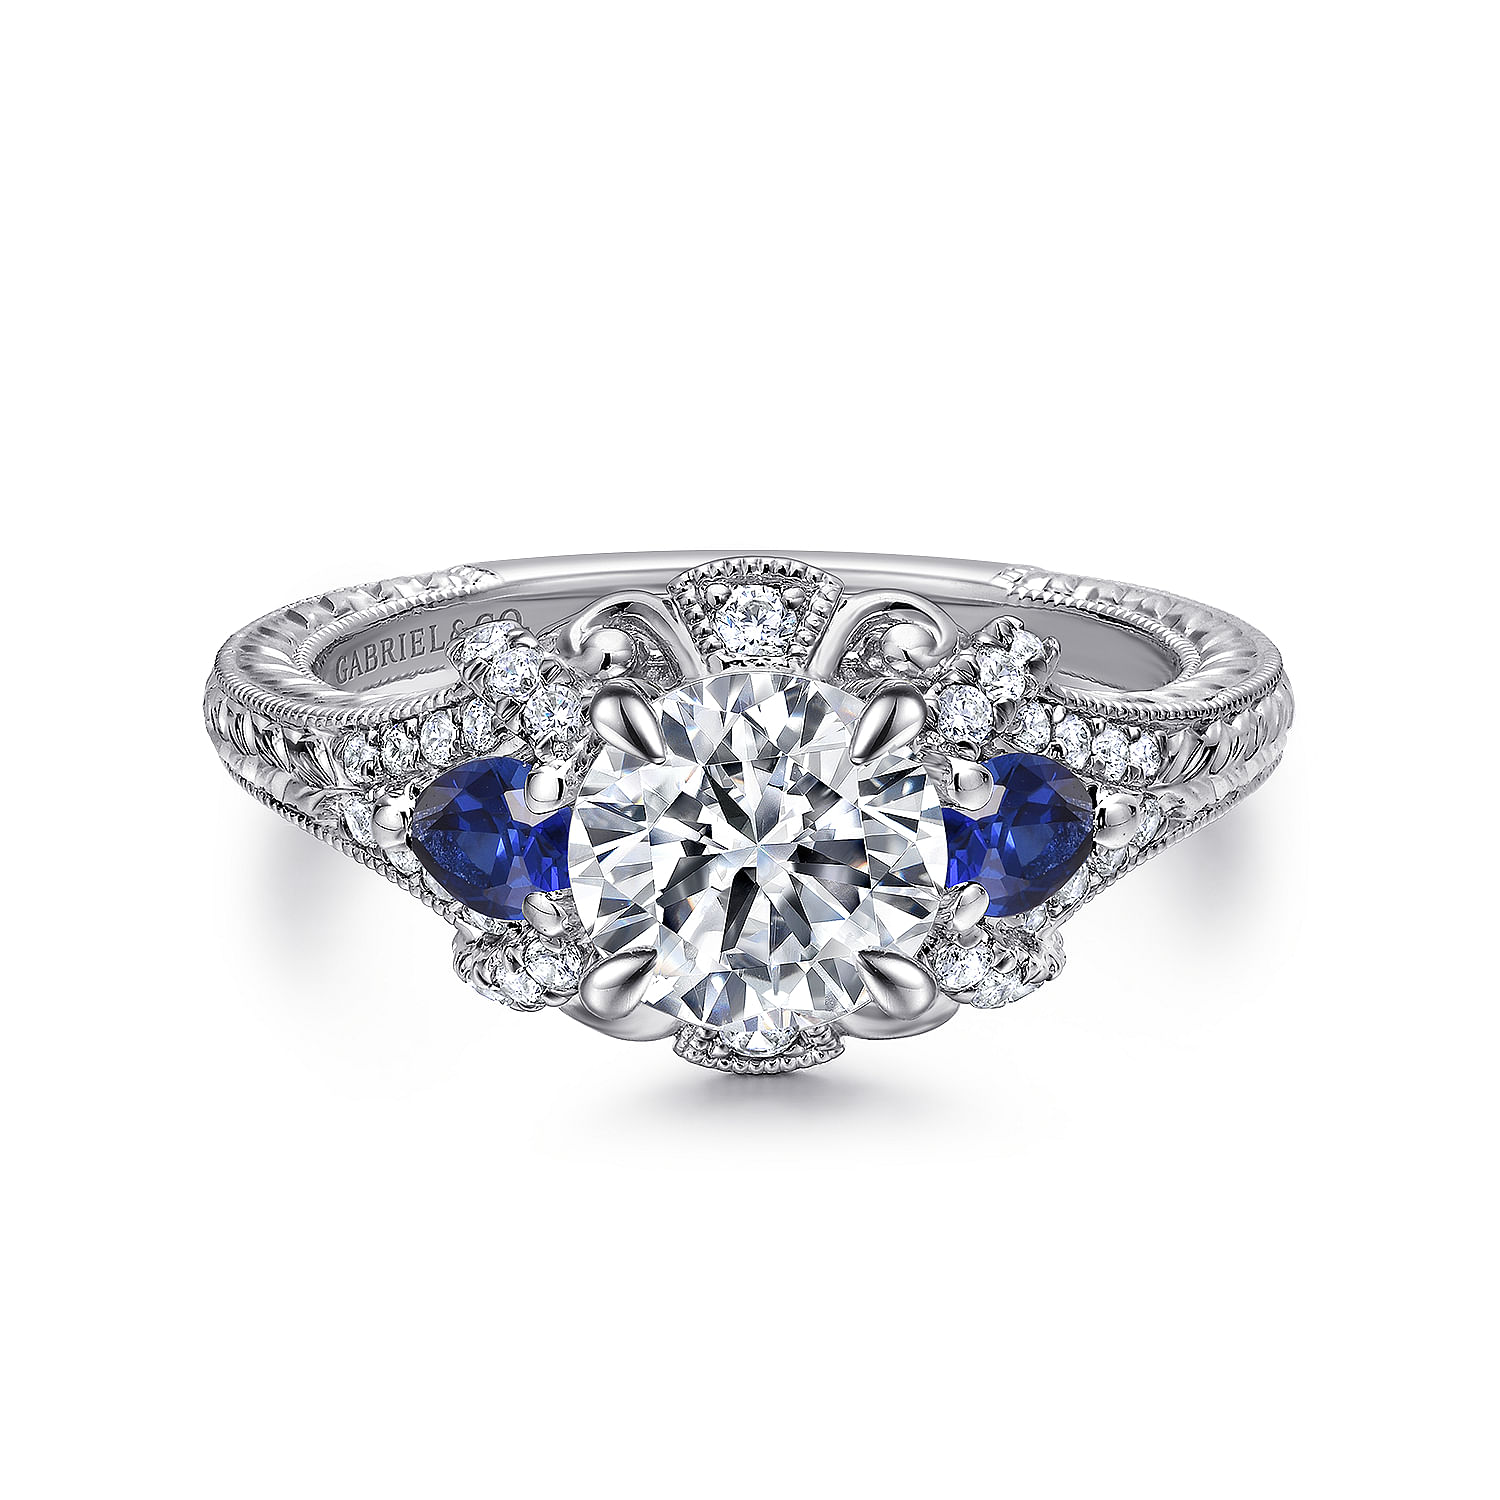 Chrystie - 18K White Gold Round Sapphire and Diamond Engagement Ring